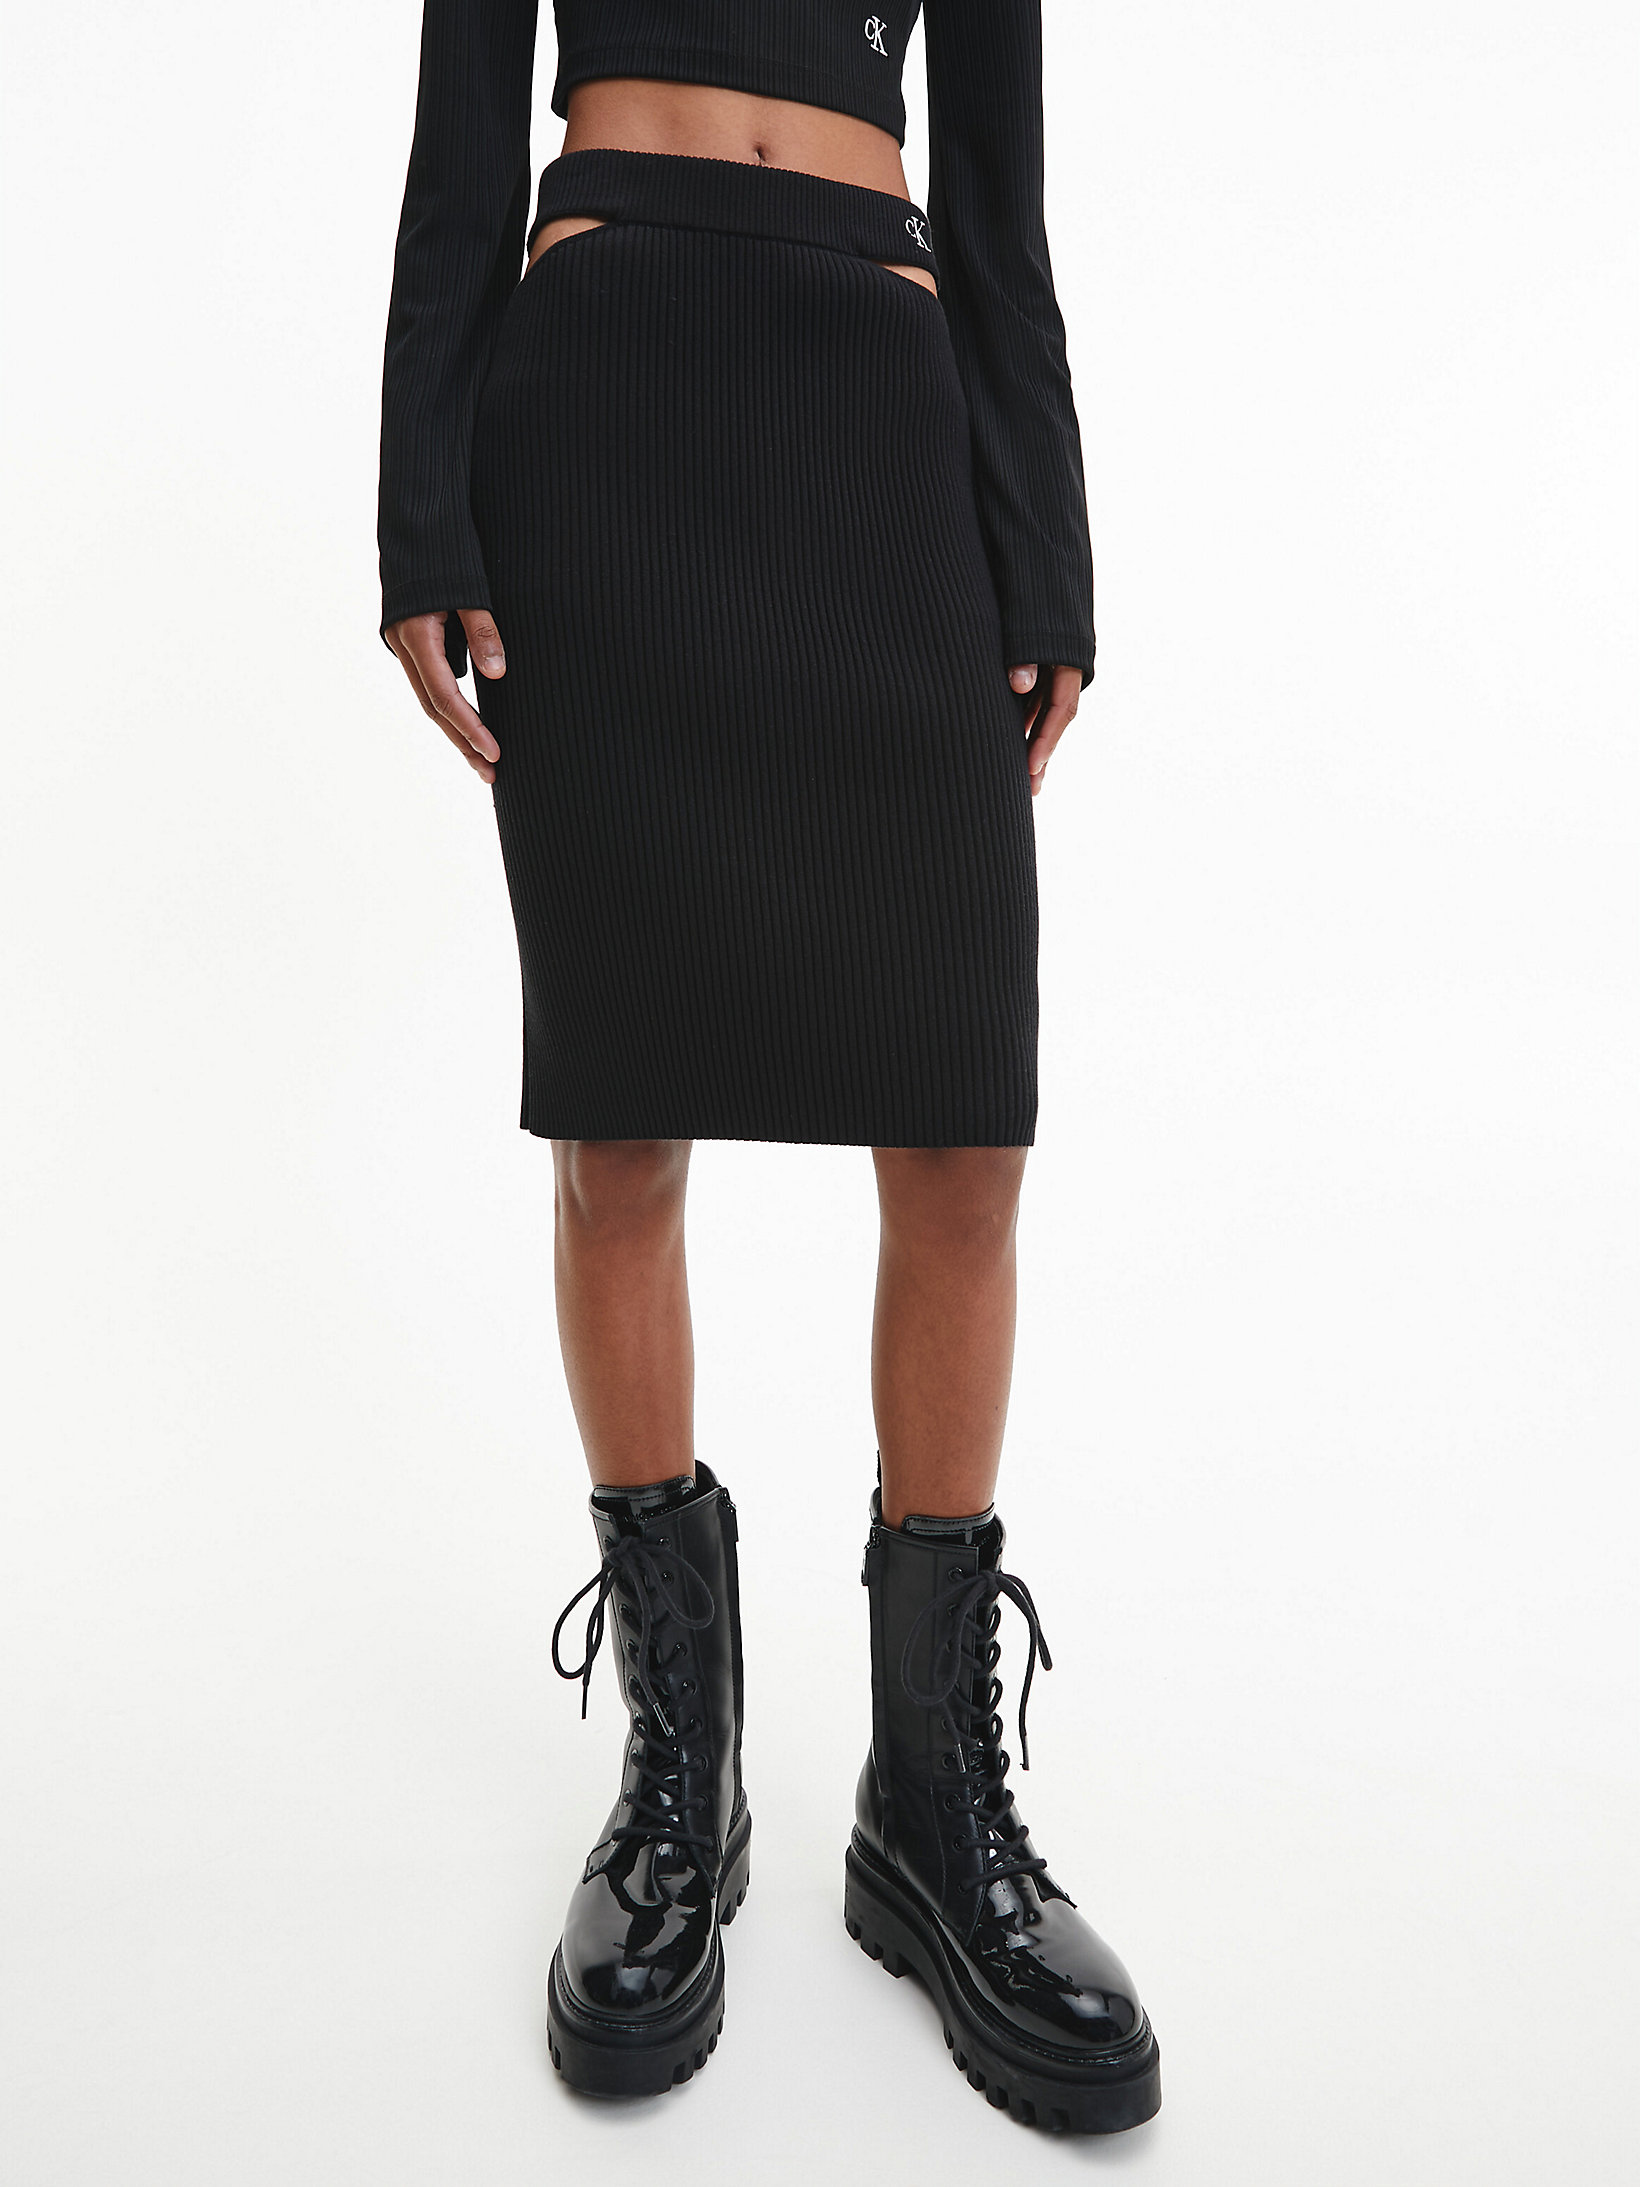 CK Black Cut Out Knit Pencil Skirt undefined women Calvin Klein